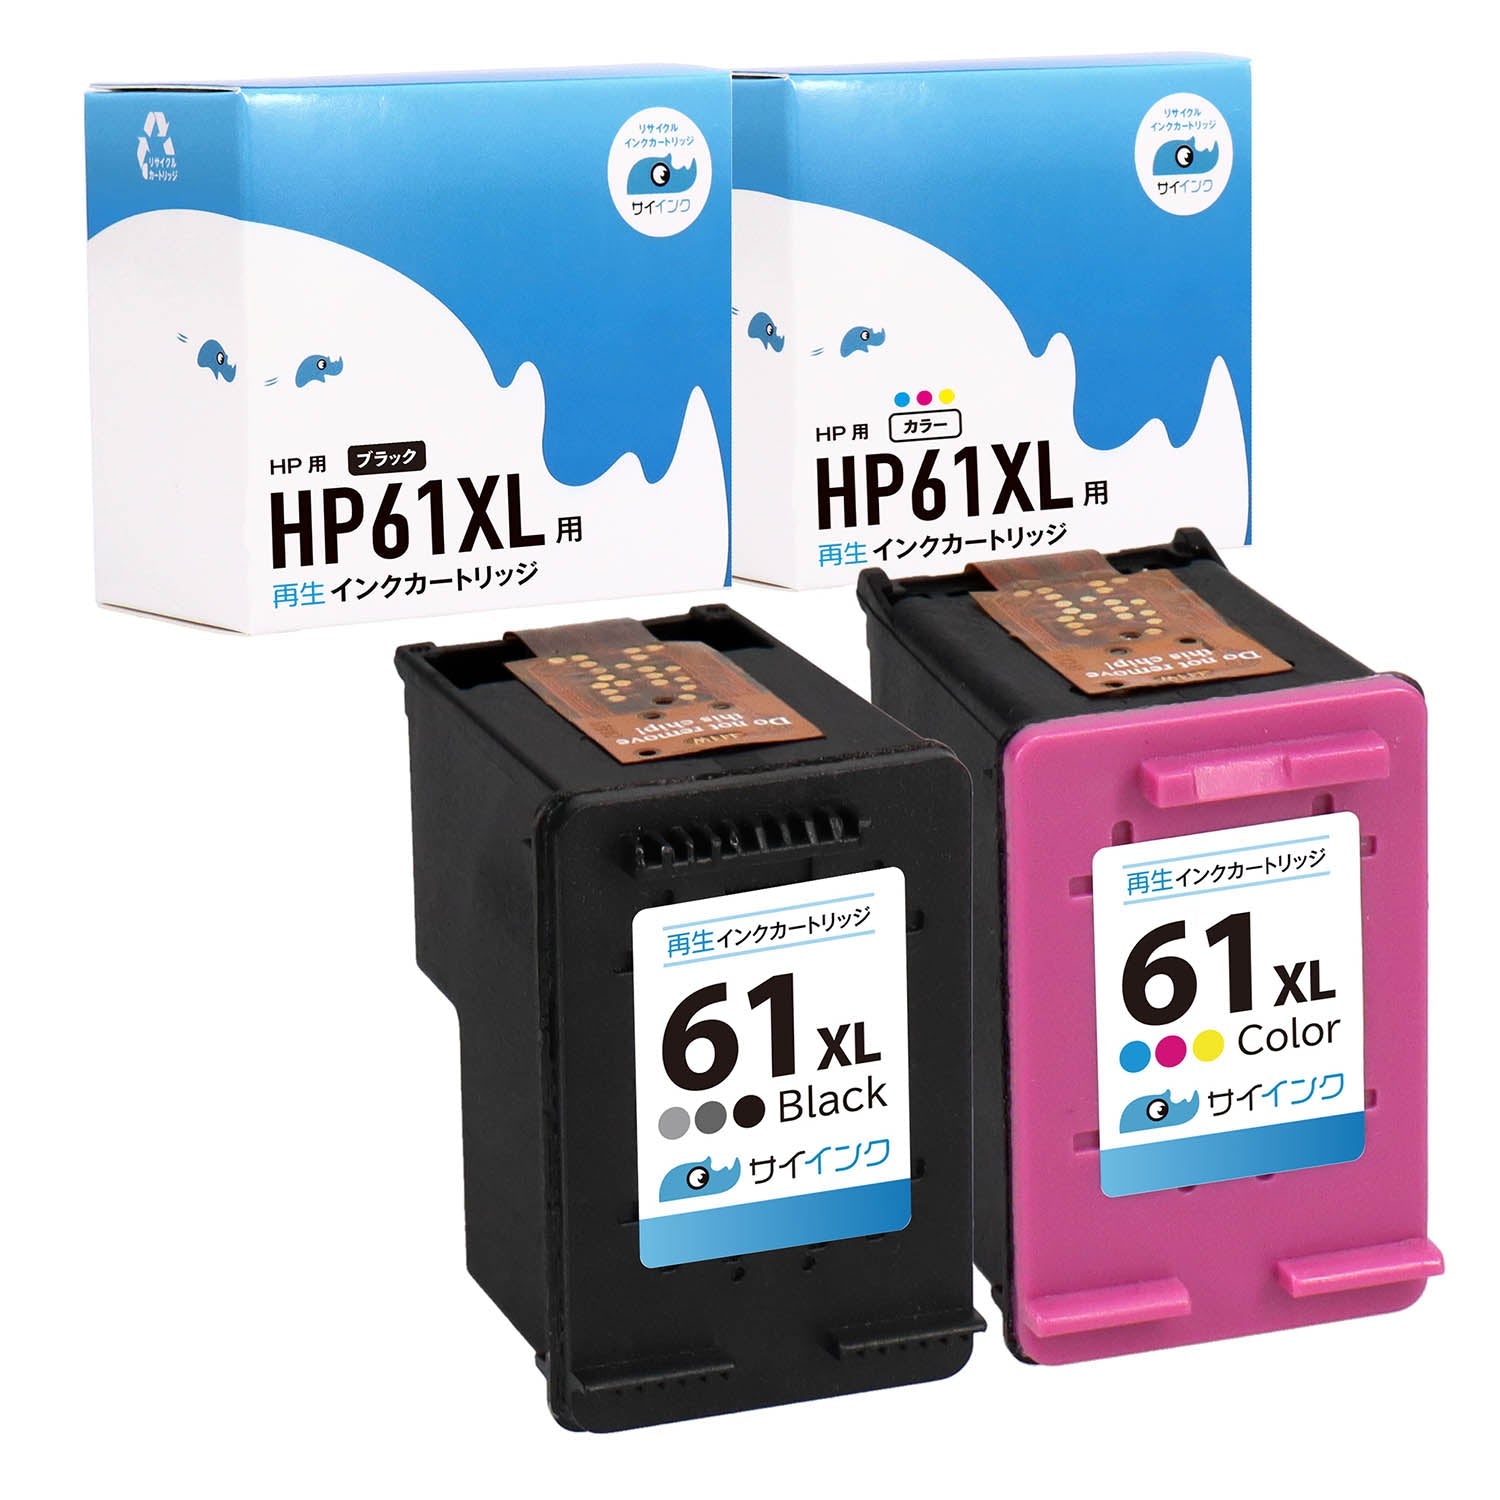 HP用 HP 61XL リサイクルインク ブラック＋カラー3色 増量版